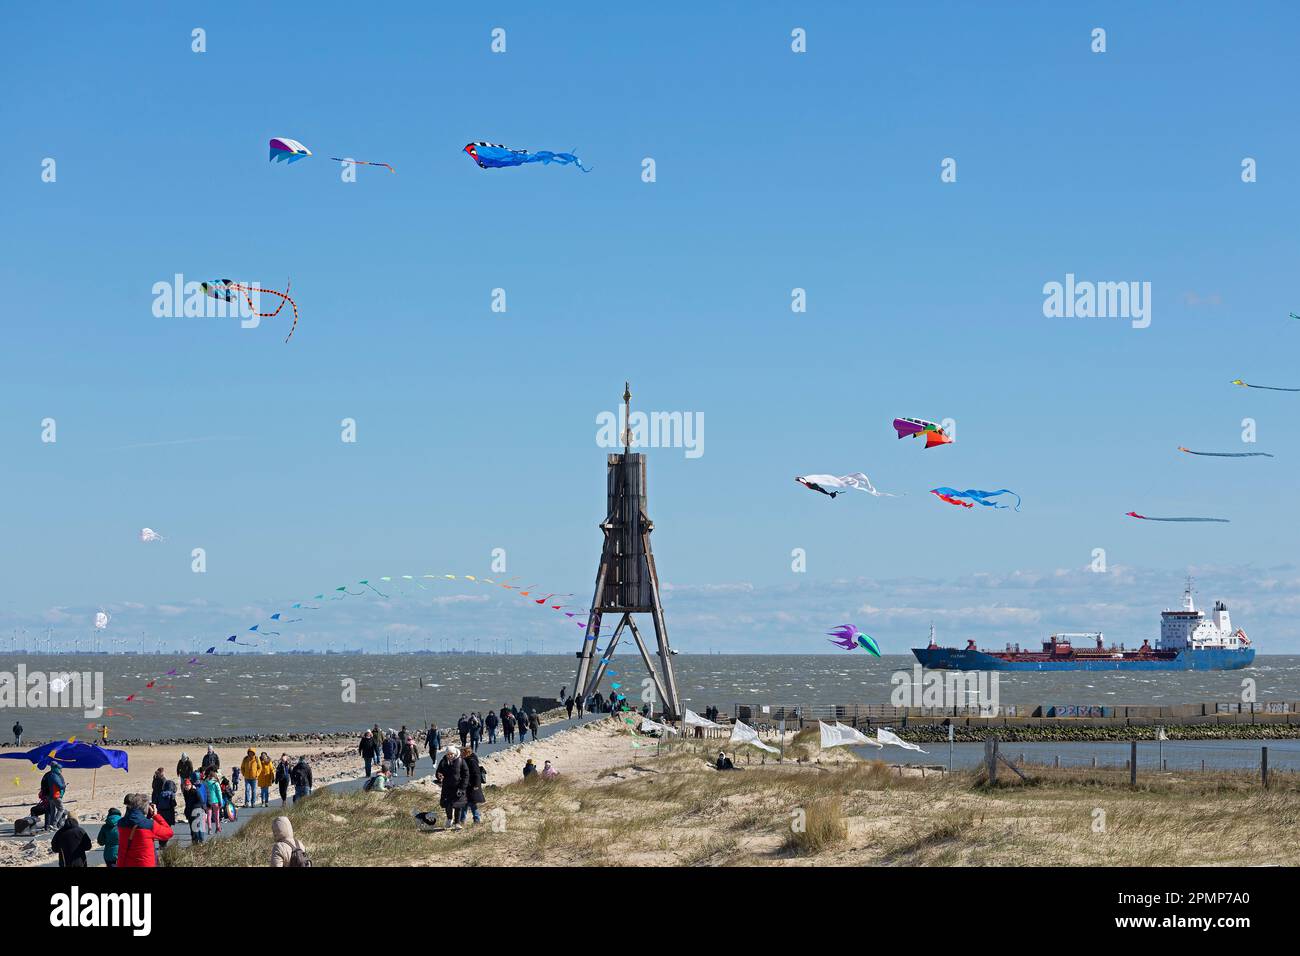 Menschen, fliegende Drachen, Frachtschiff, Seemarker Kugelbake, Nordsee, Elbe, Cuxhaven, Niedersachsen, Deutschland Stockfoto